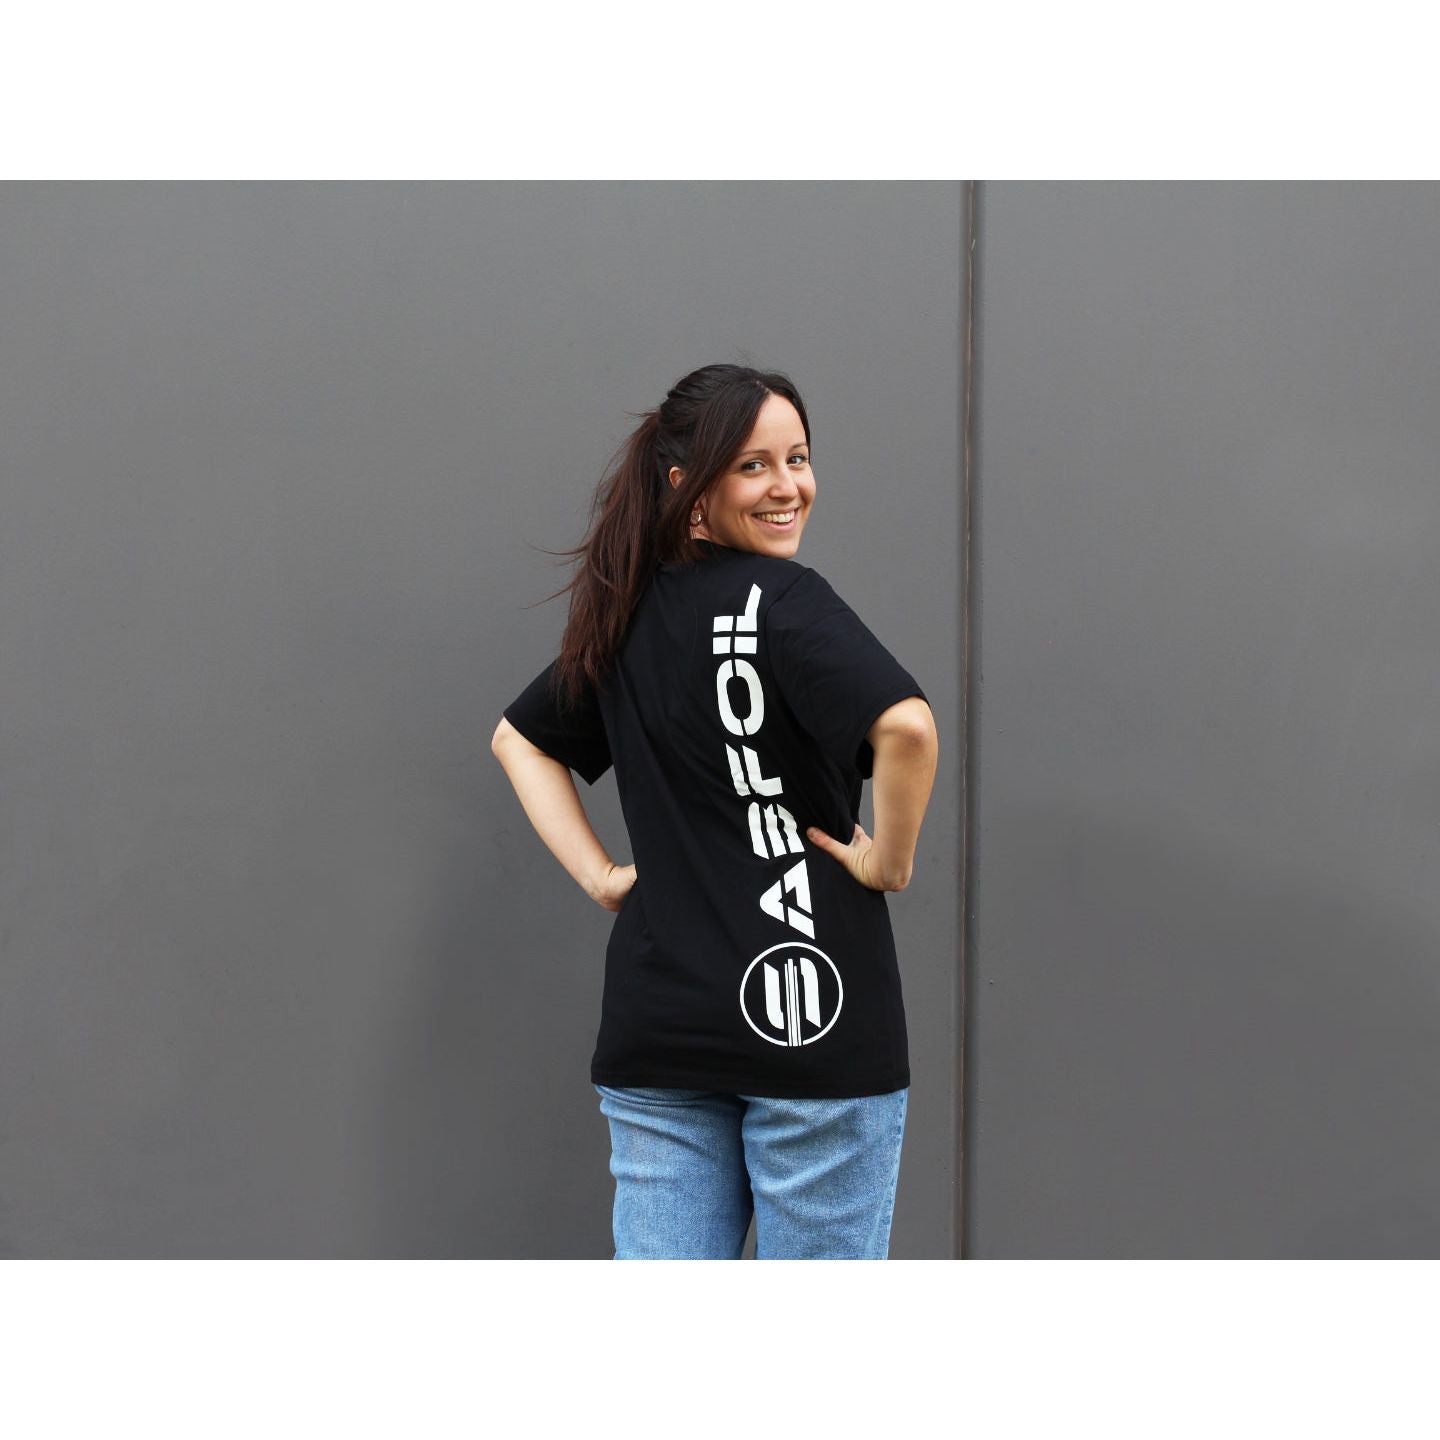 Black Sabfoil T-shirt - size M